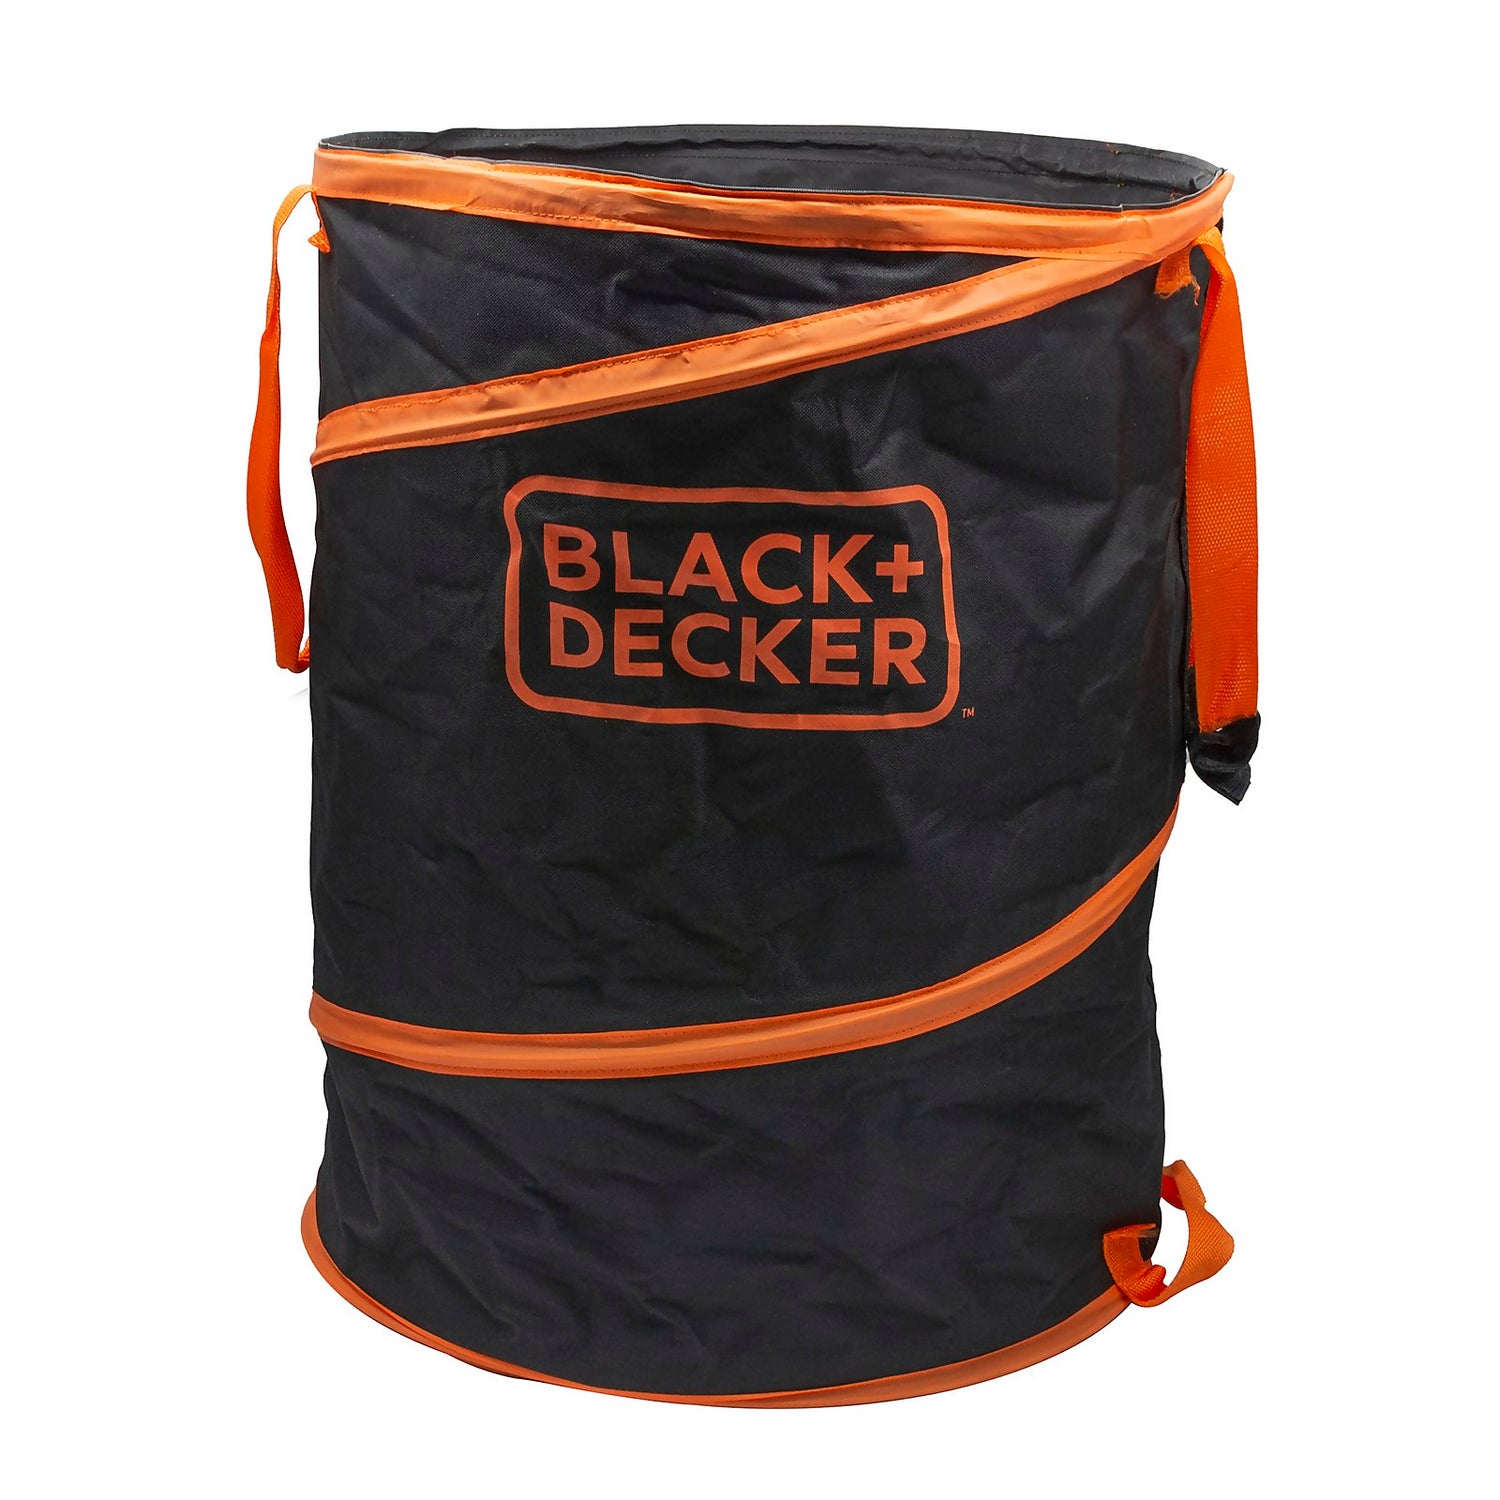 Black & Decker Debris Bag